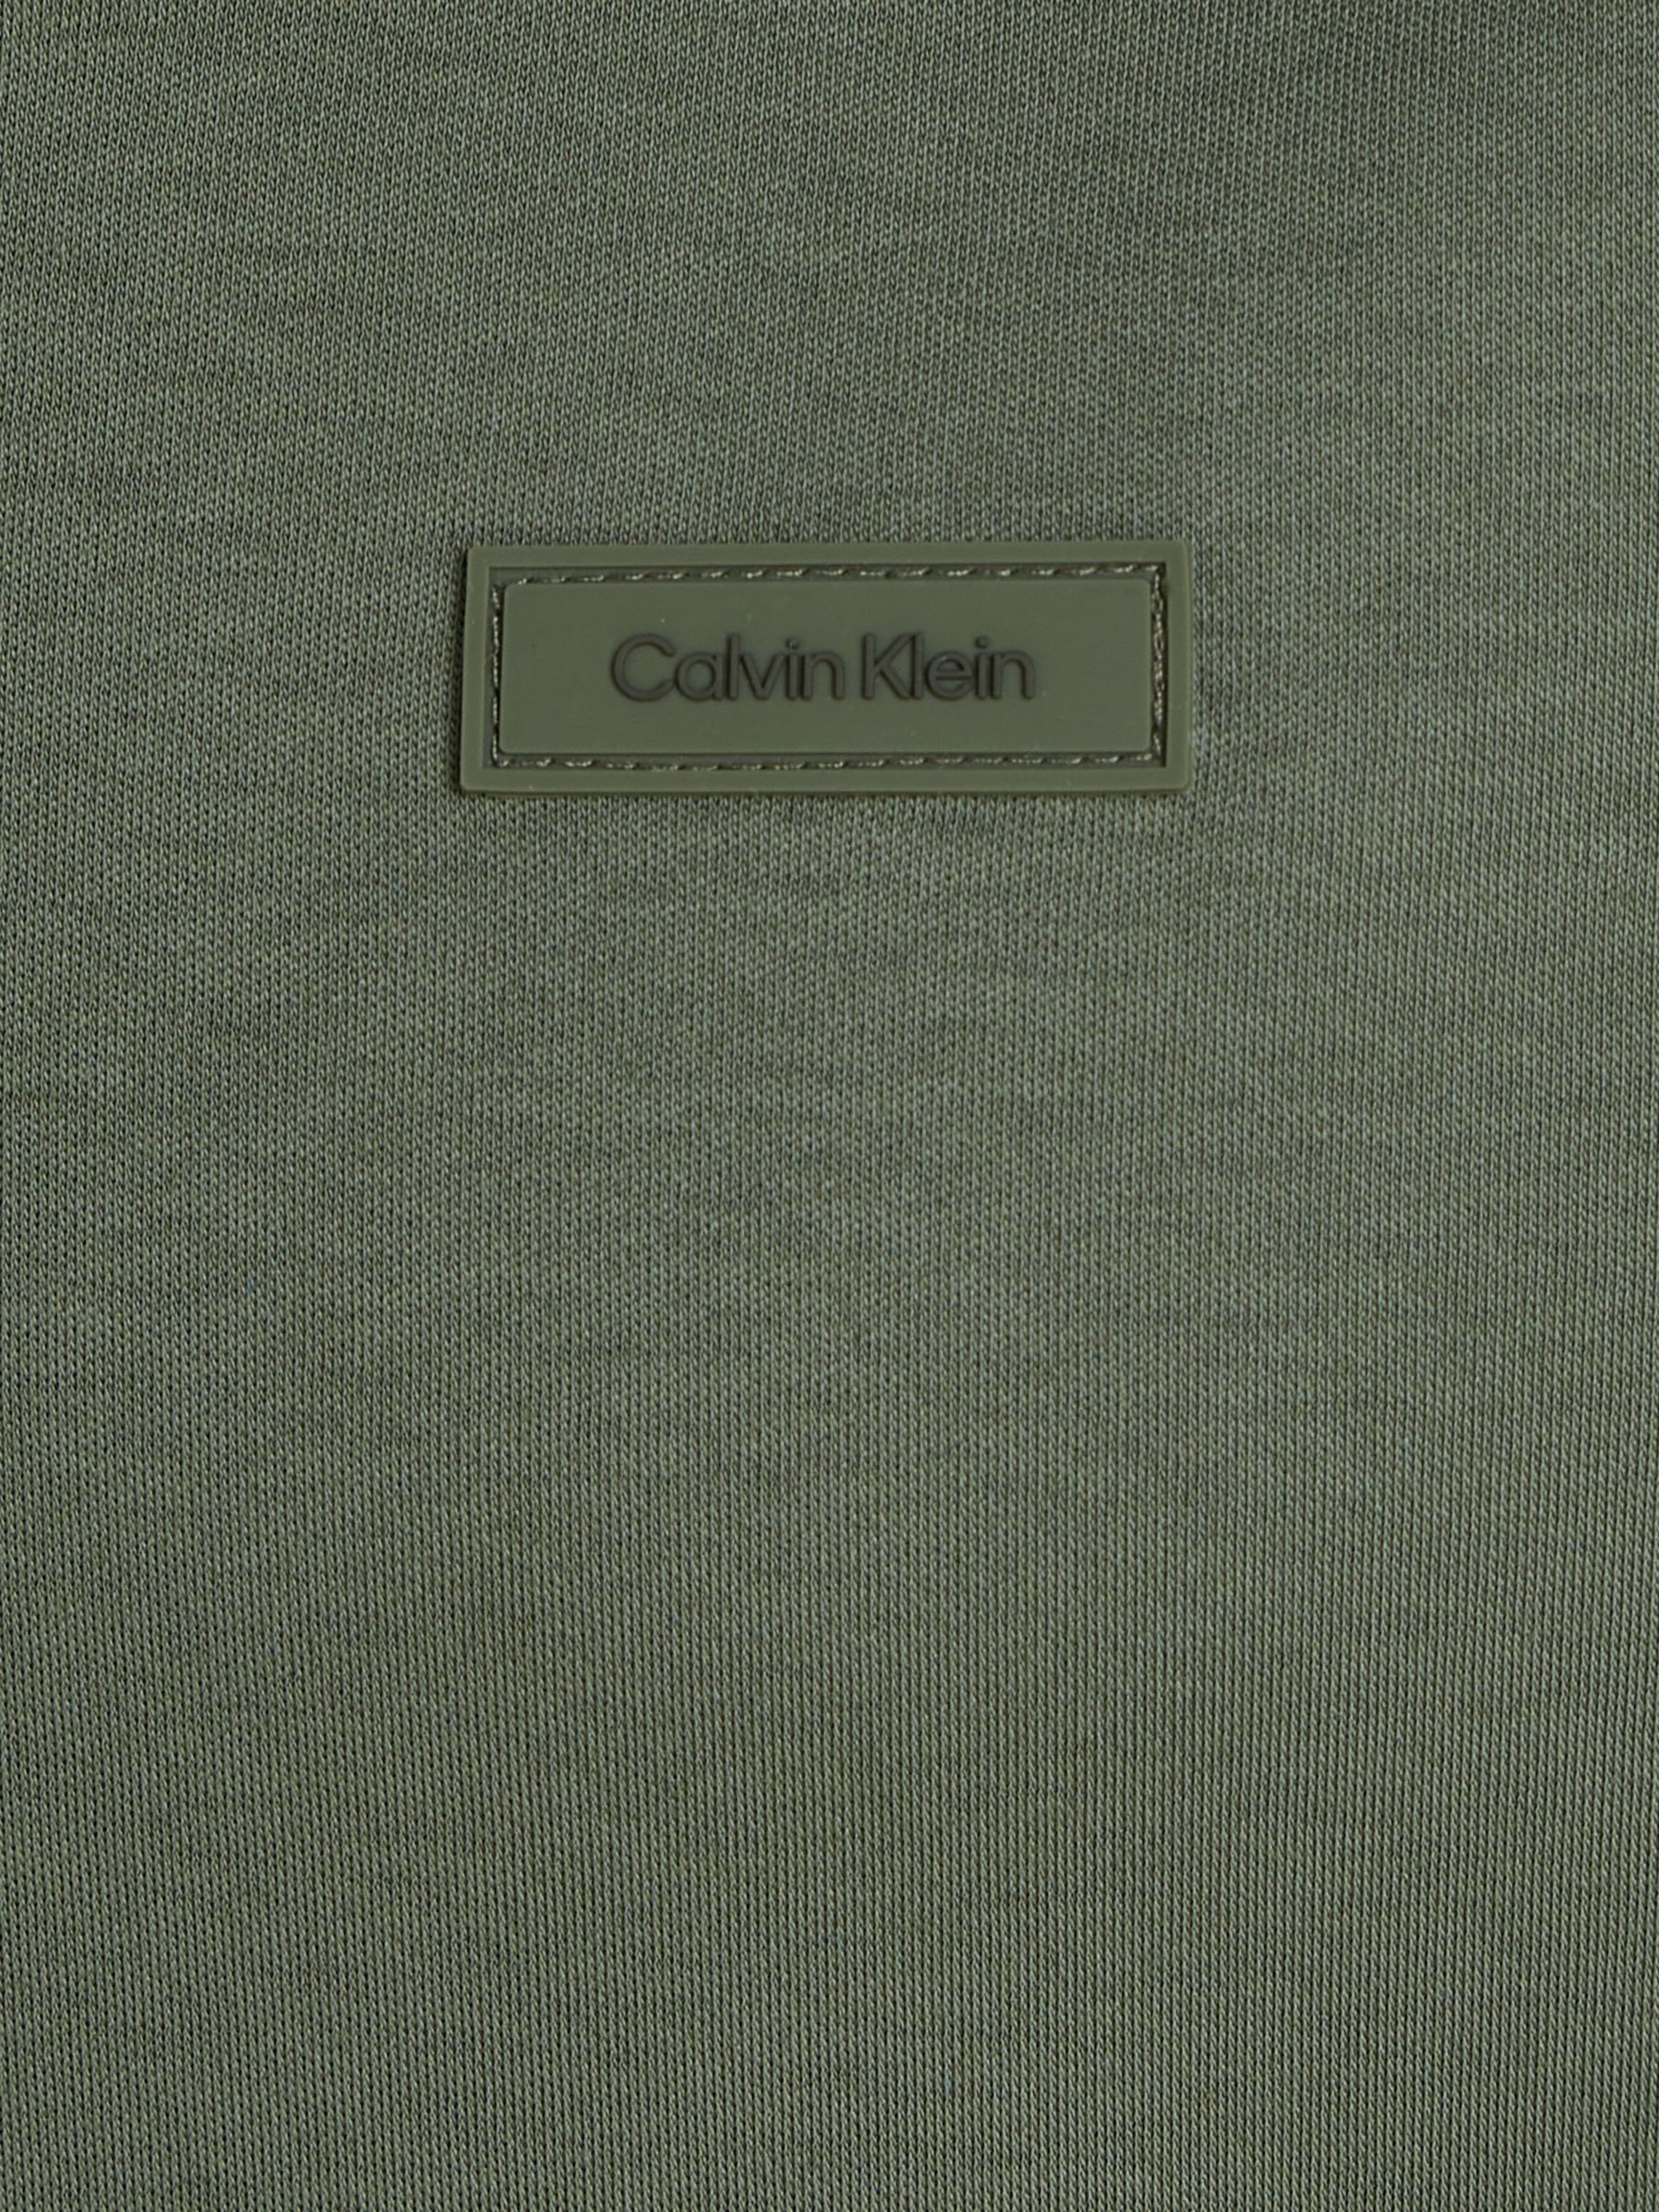 Calvin Klein Slim Fit Polo Shirt, Thyme at John Lewis & Partners